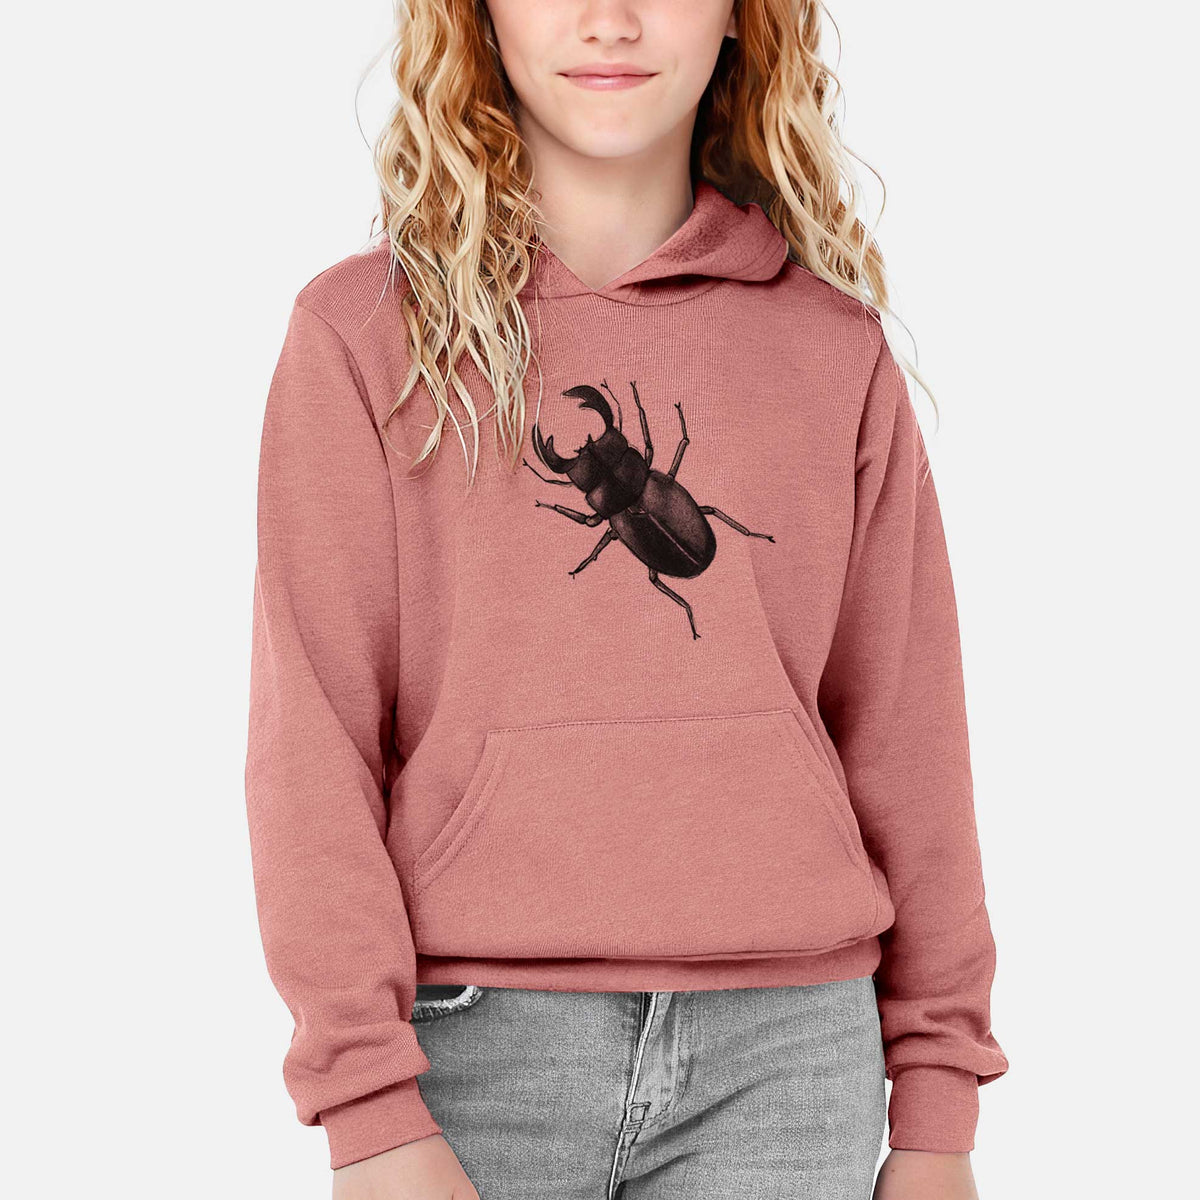 Dorcus titanus - Giant Stag Beetle - Youth Hoodie Sweatshirt